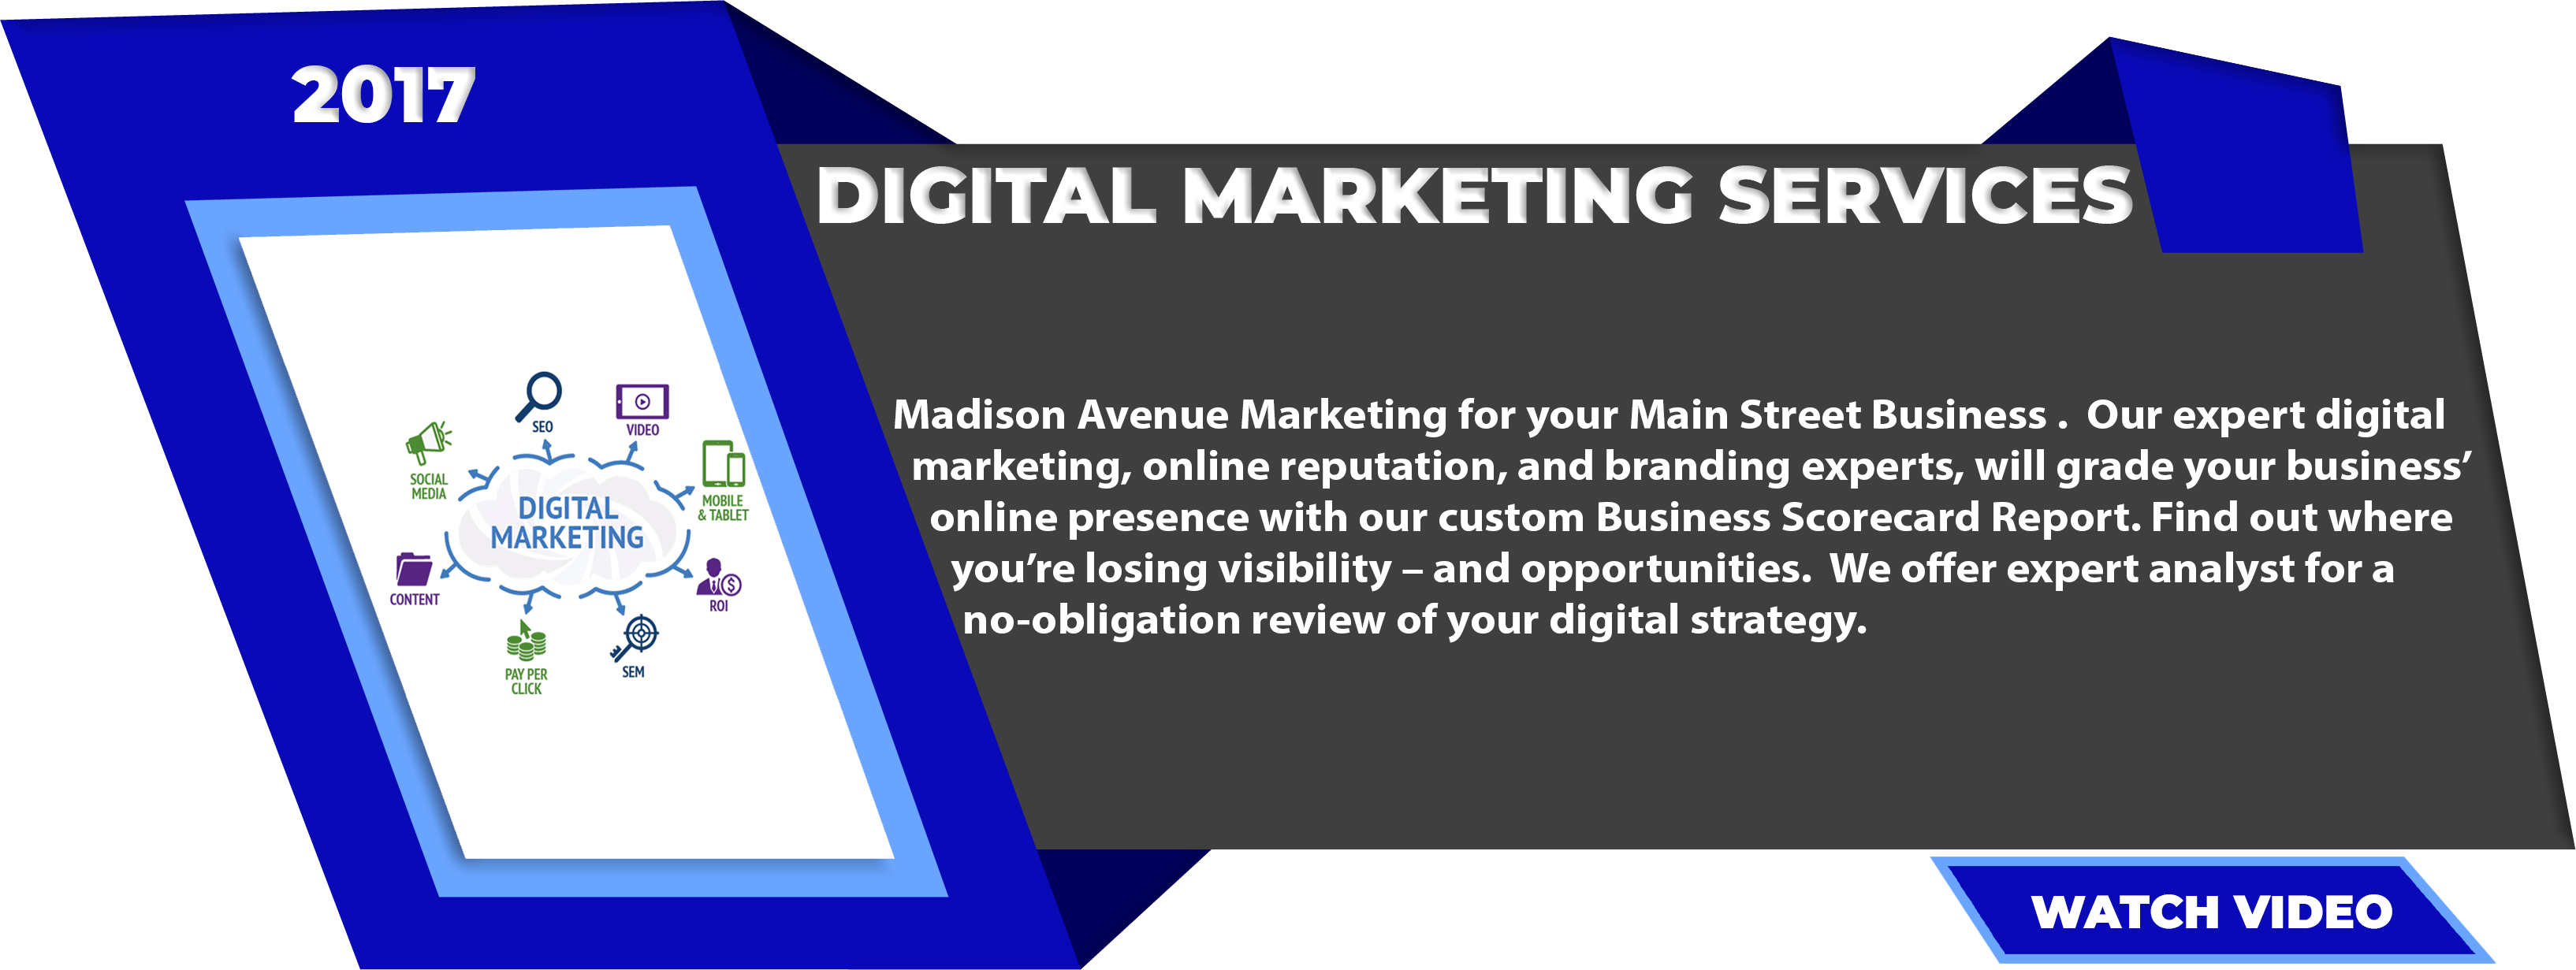 Digital-Marketing-Services-2017-1